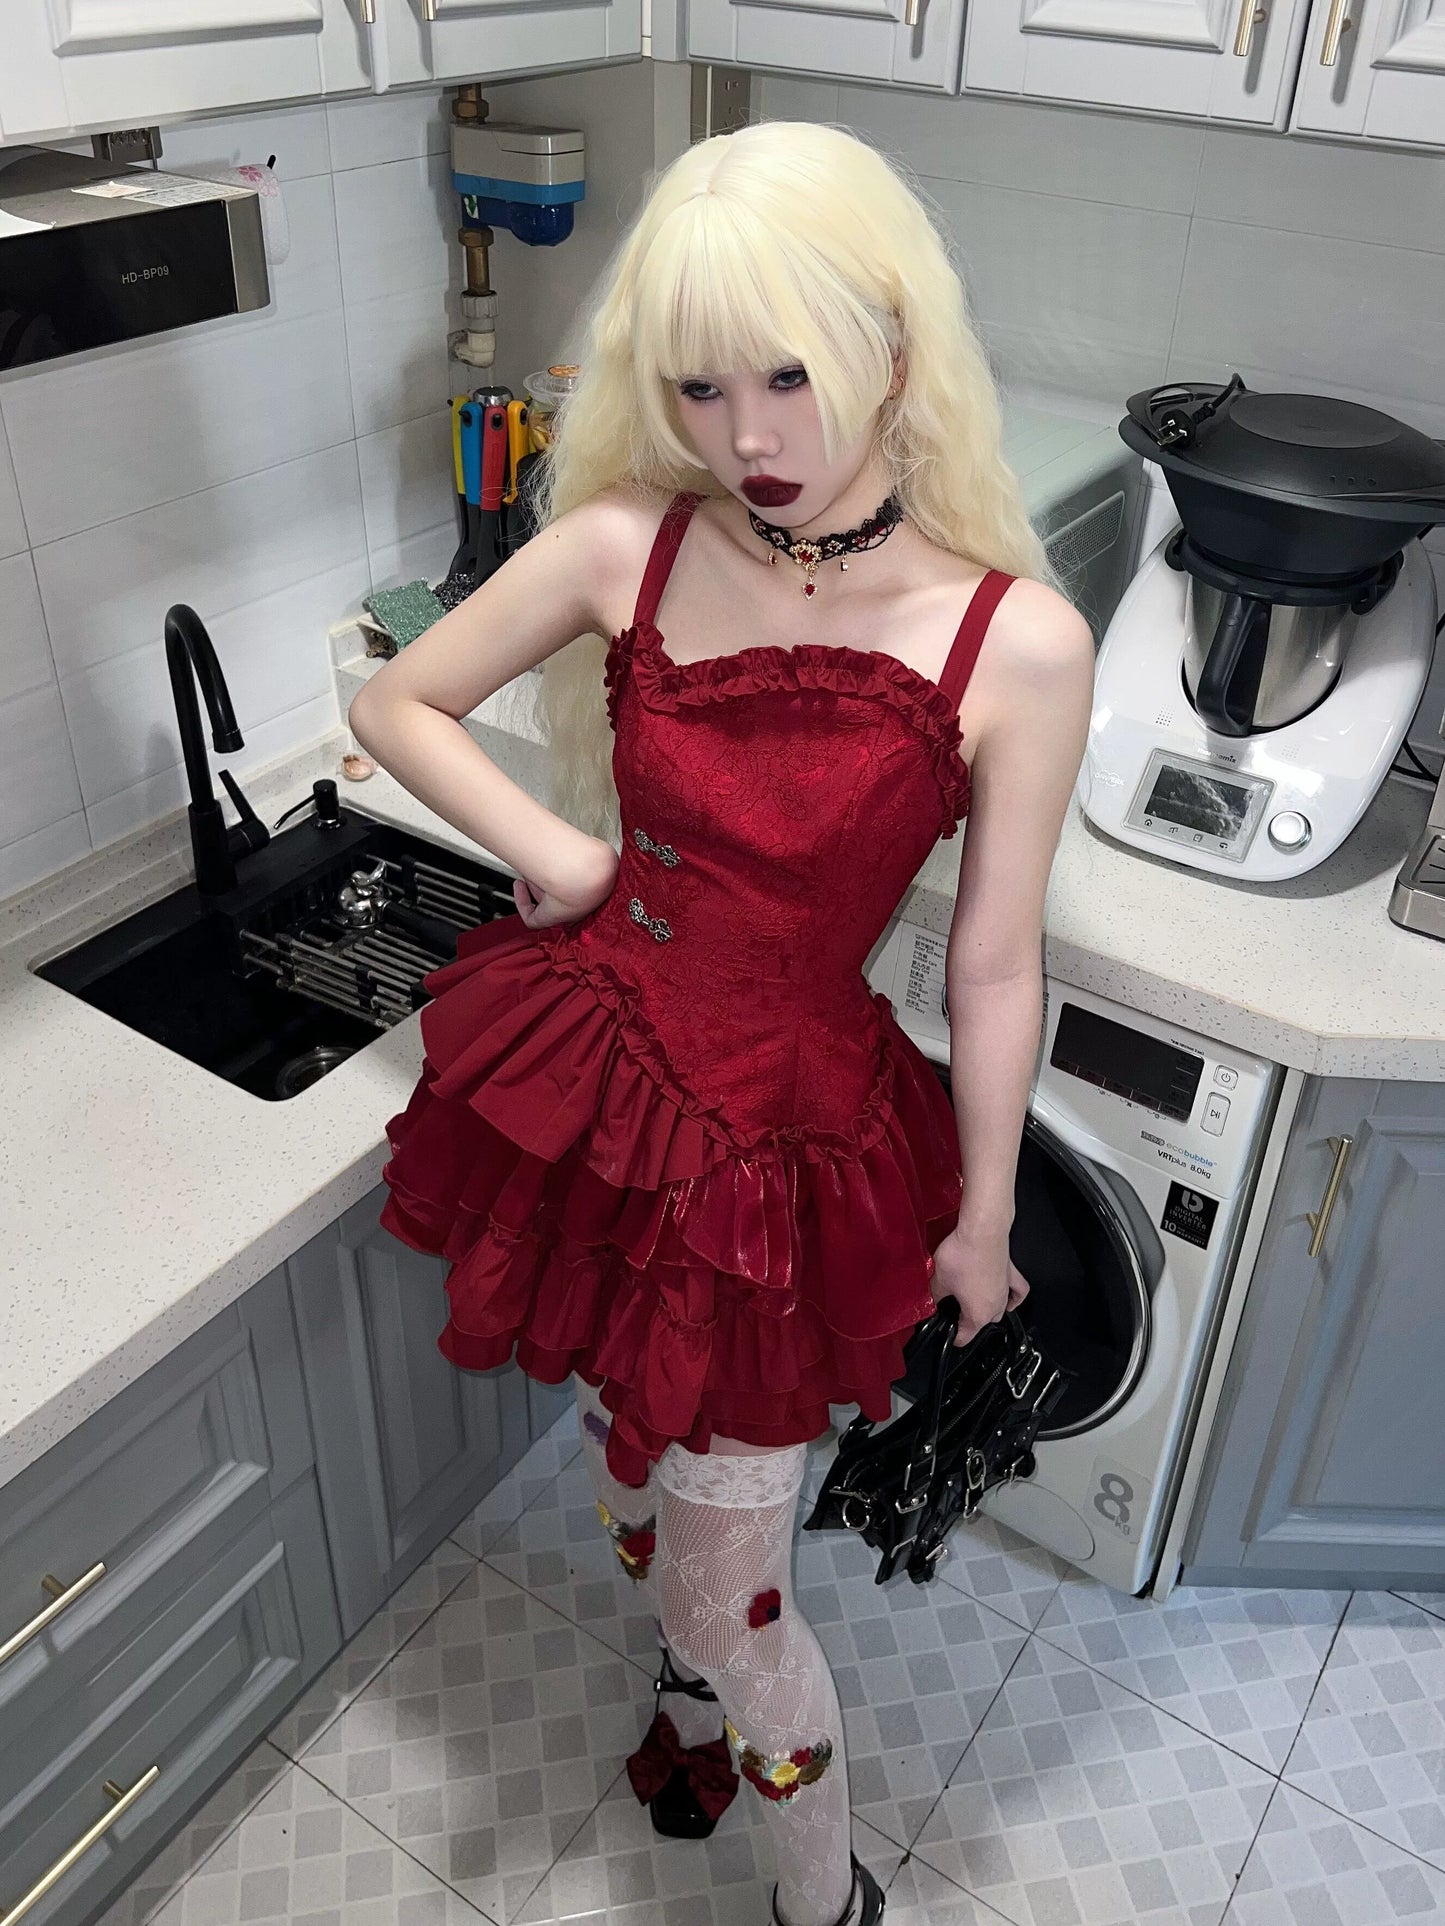 [Pre-orders available until 5/13] Night Visit Vampire Mini Jumper Skirt